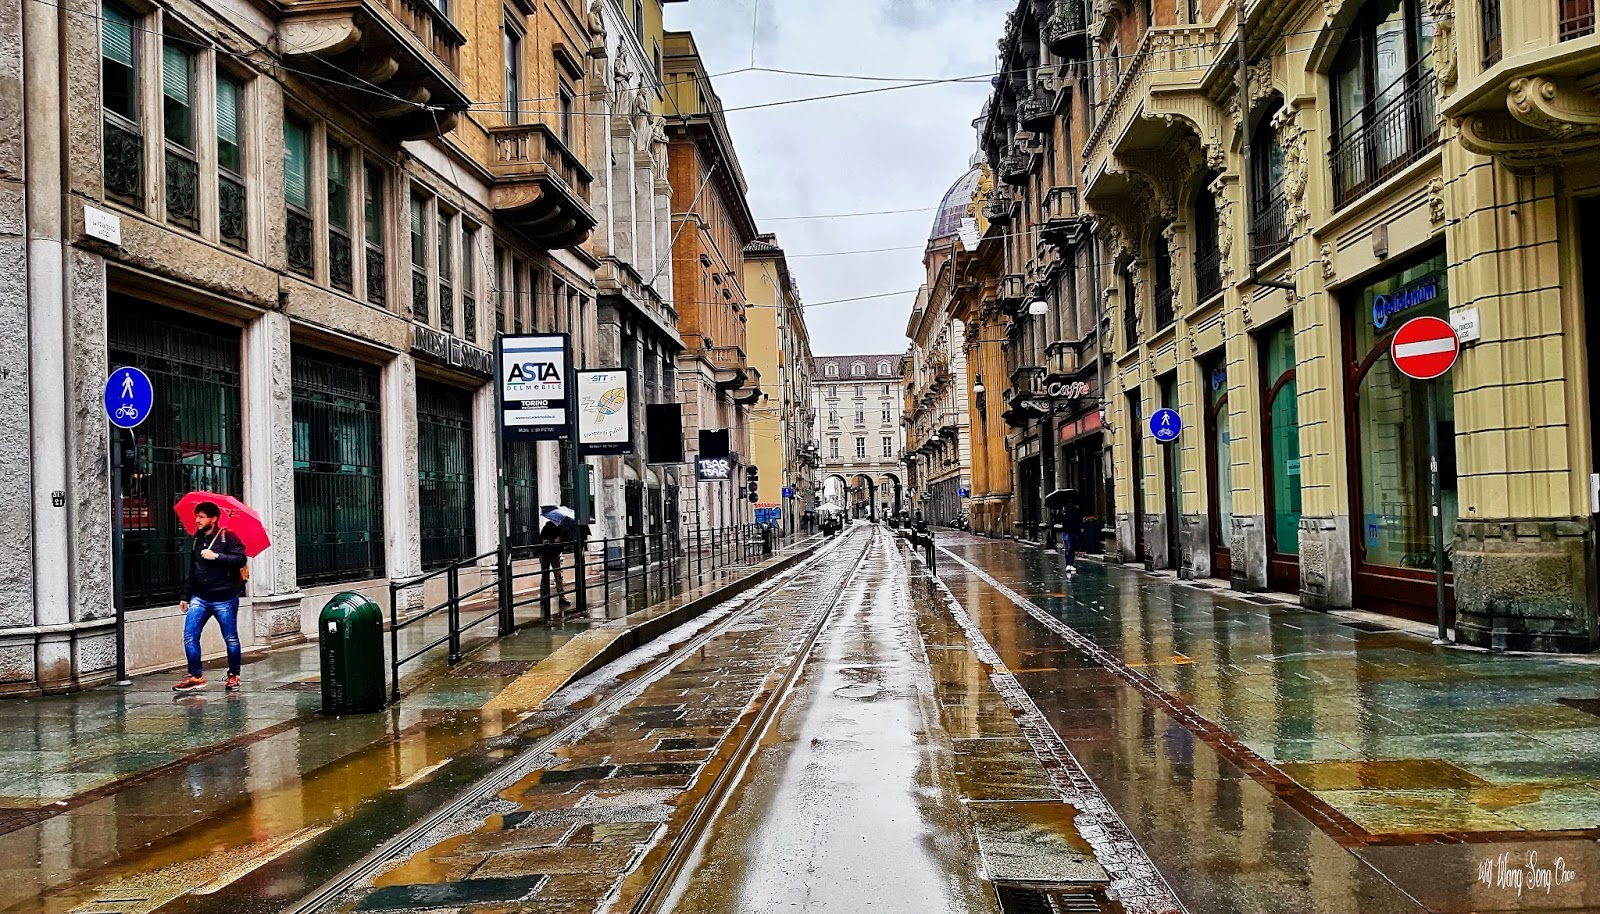 Street ed. Дождь и улица Агмашенебели. Переулки Бразилии. Переулок эстонский. Обои на телефон Rainy Street.